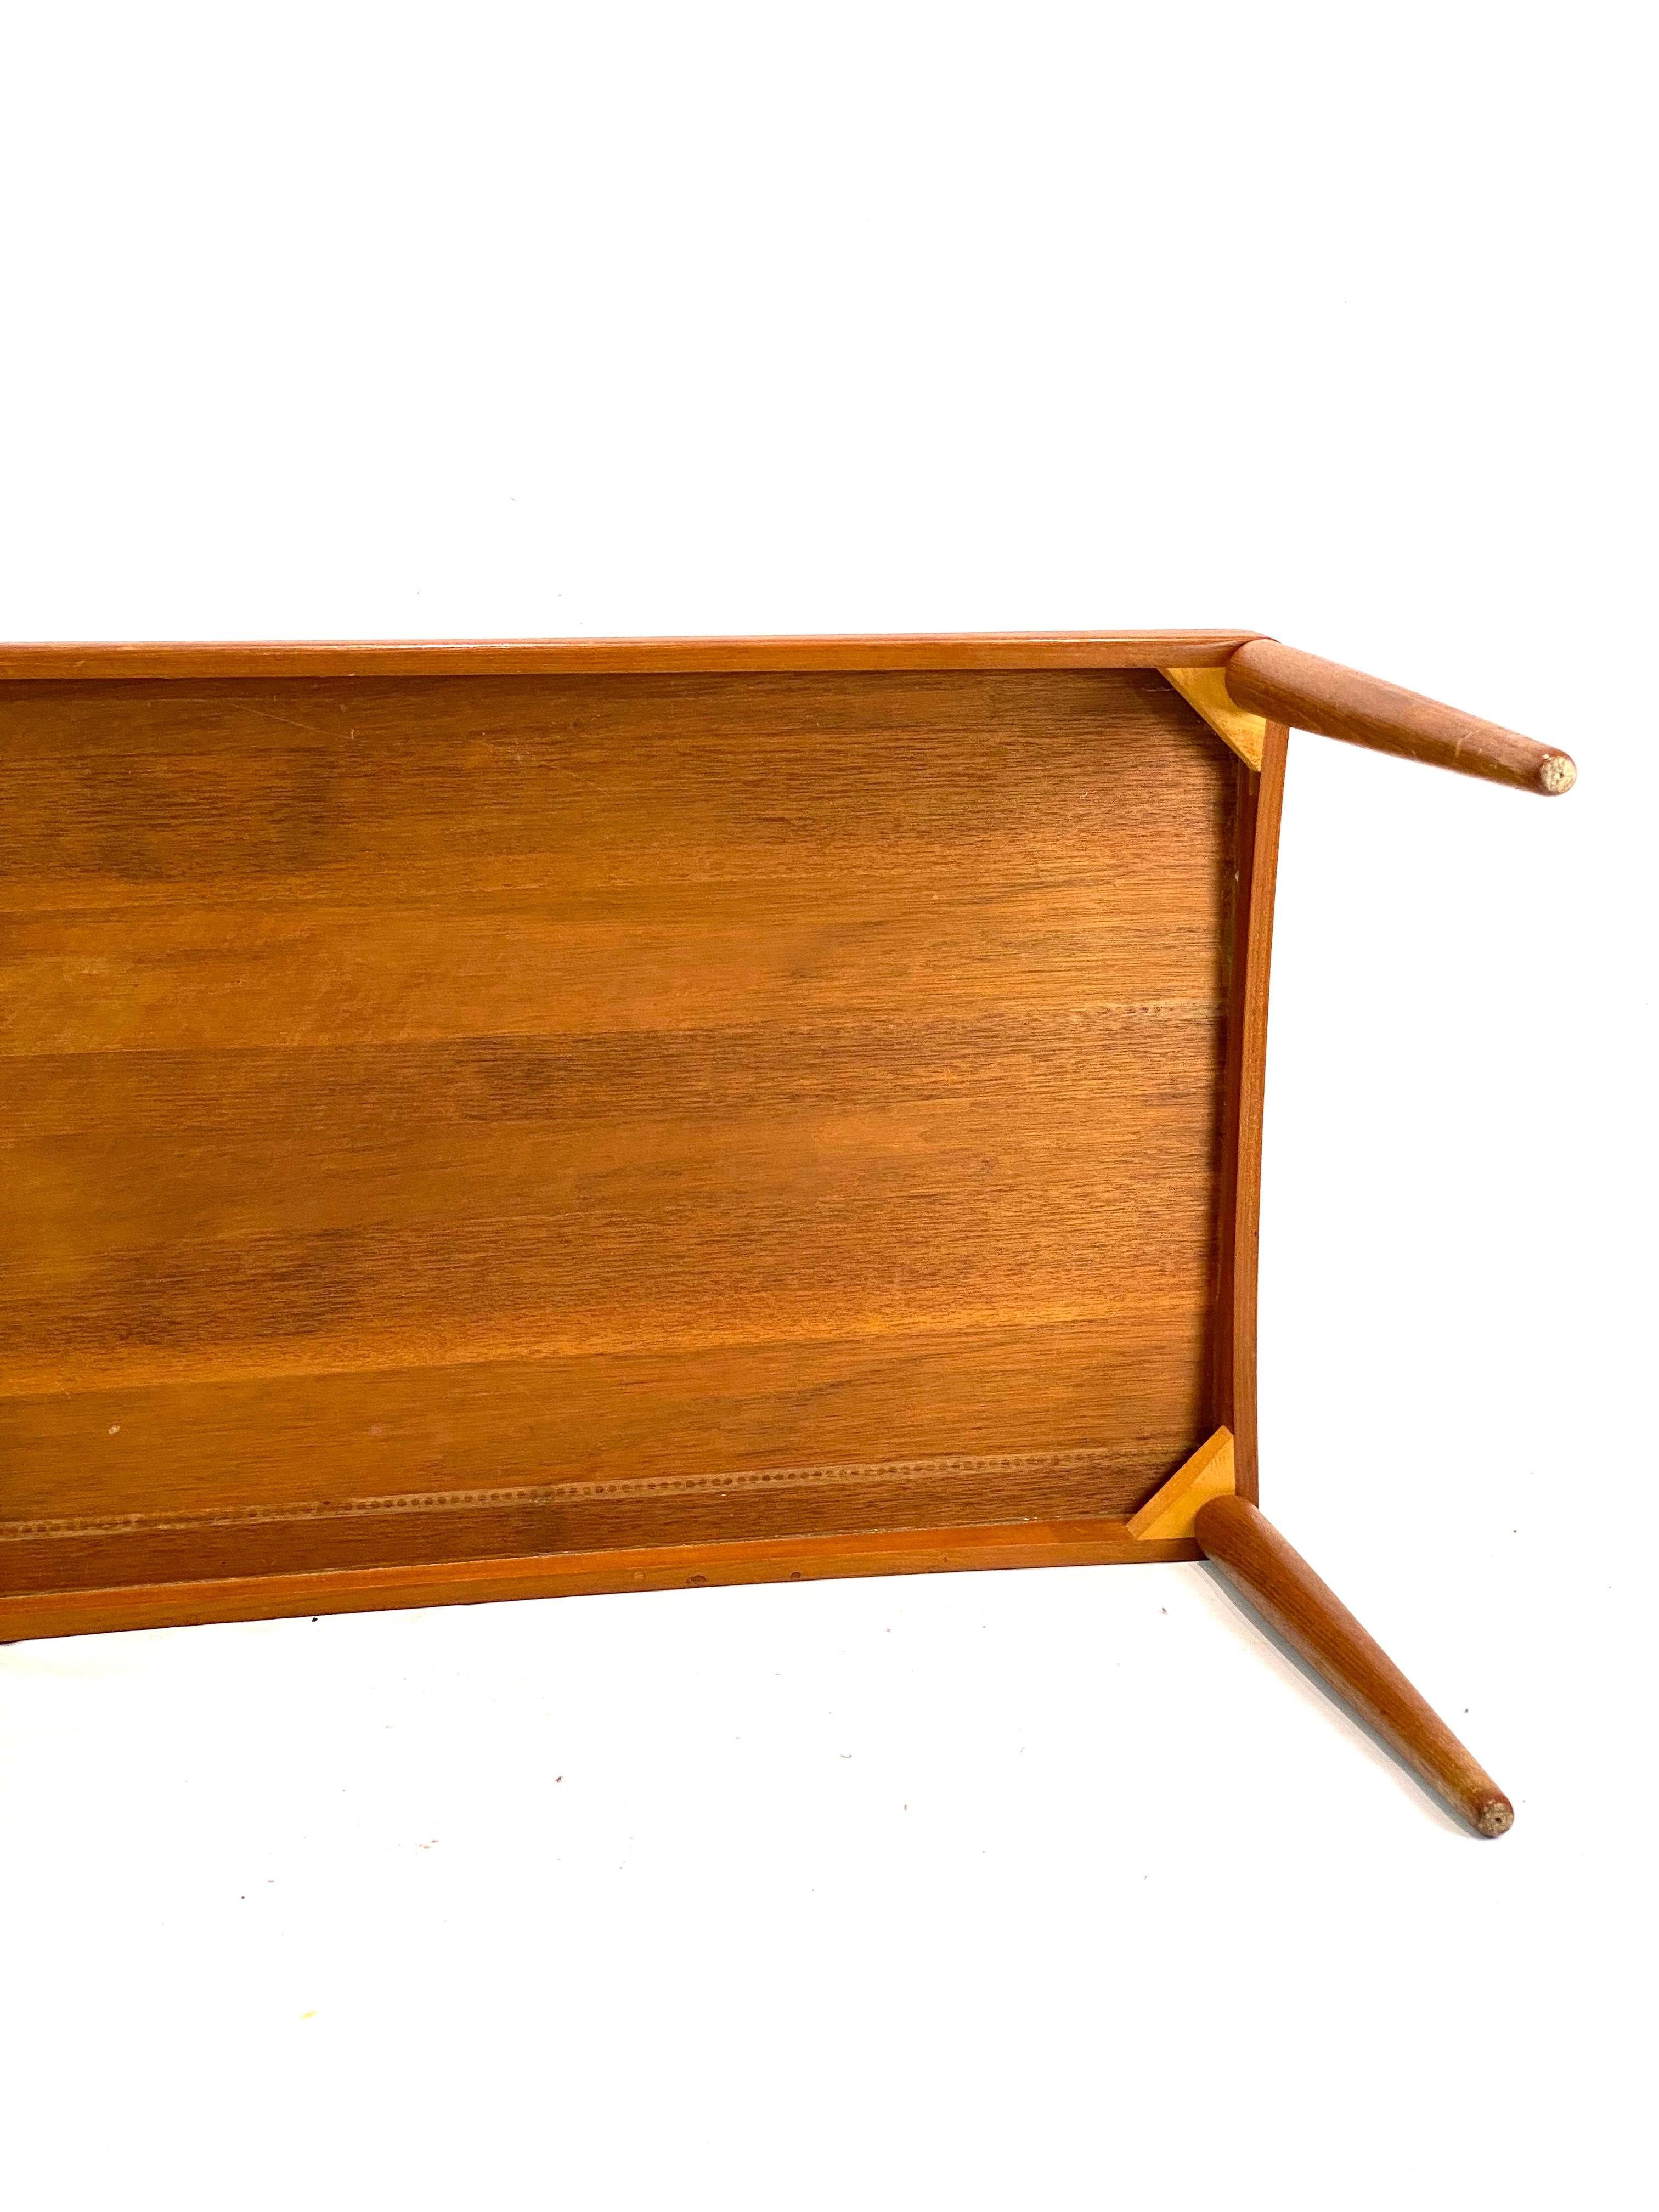 Scandinavian Modern Coffee Table in Teak Designed by H.W. Klein from the 1960s